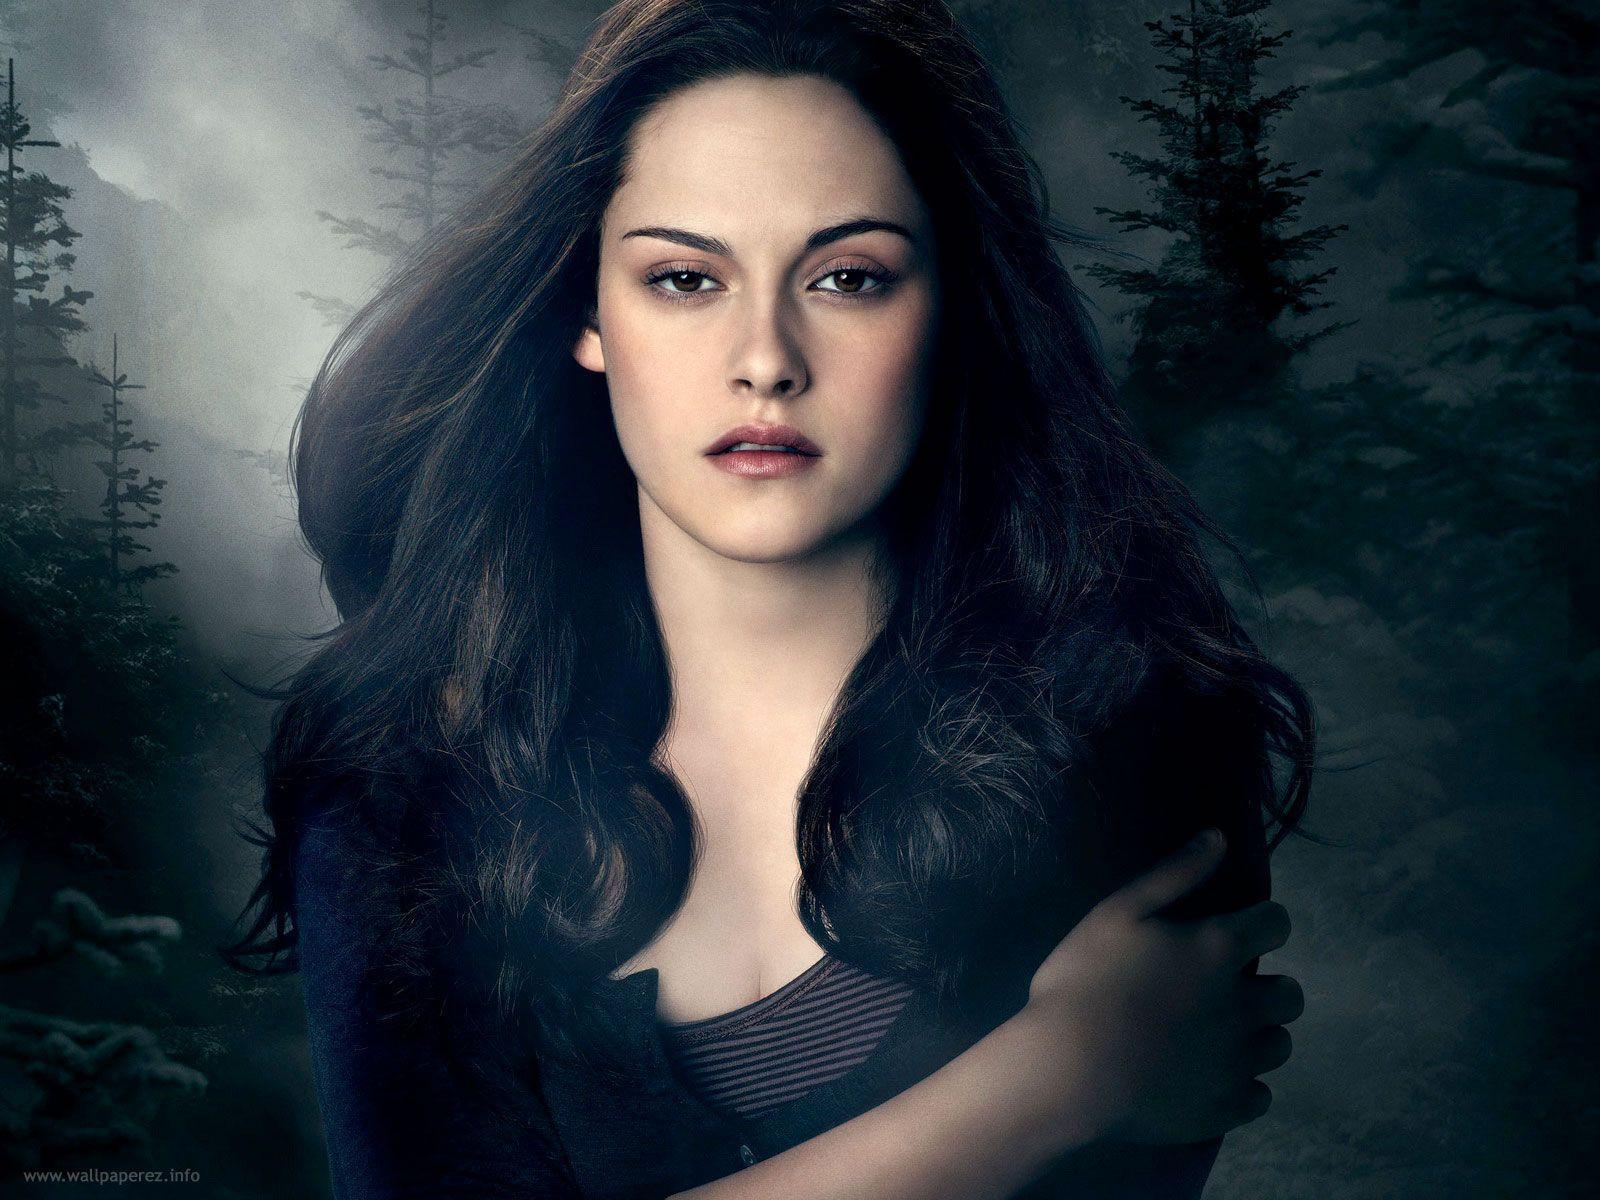 The Twilight Saga: Eclipse HD Wallpaper. Background